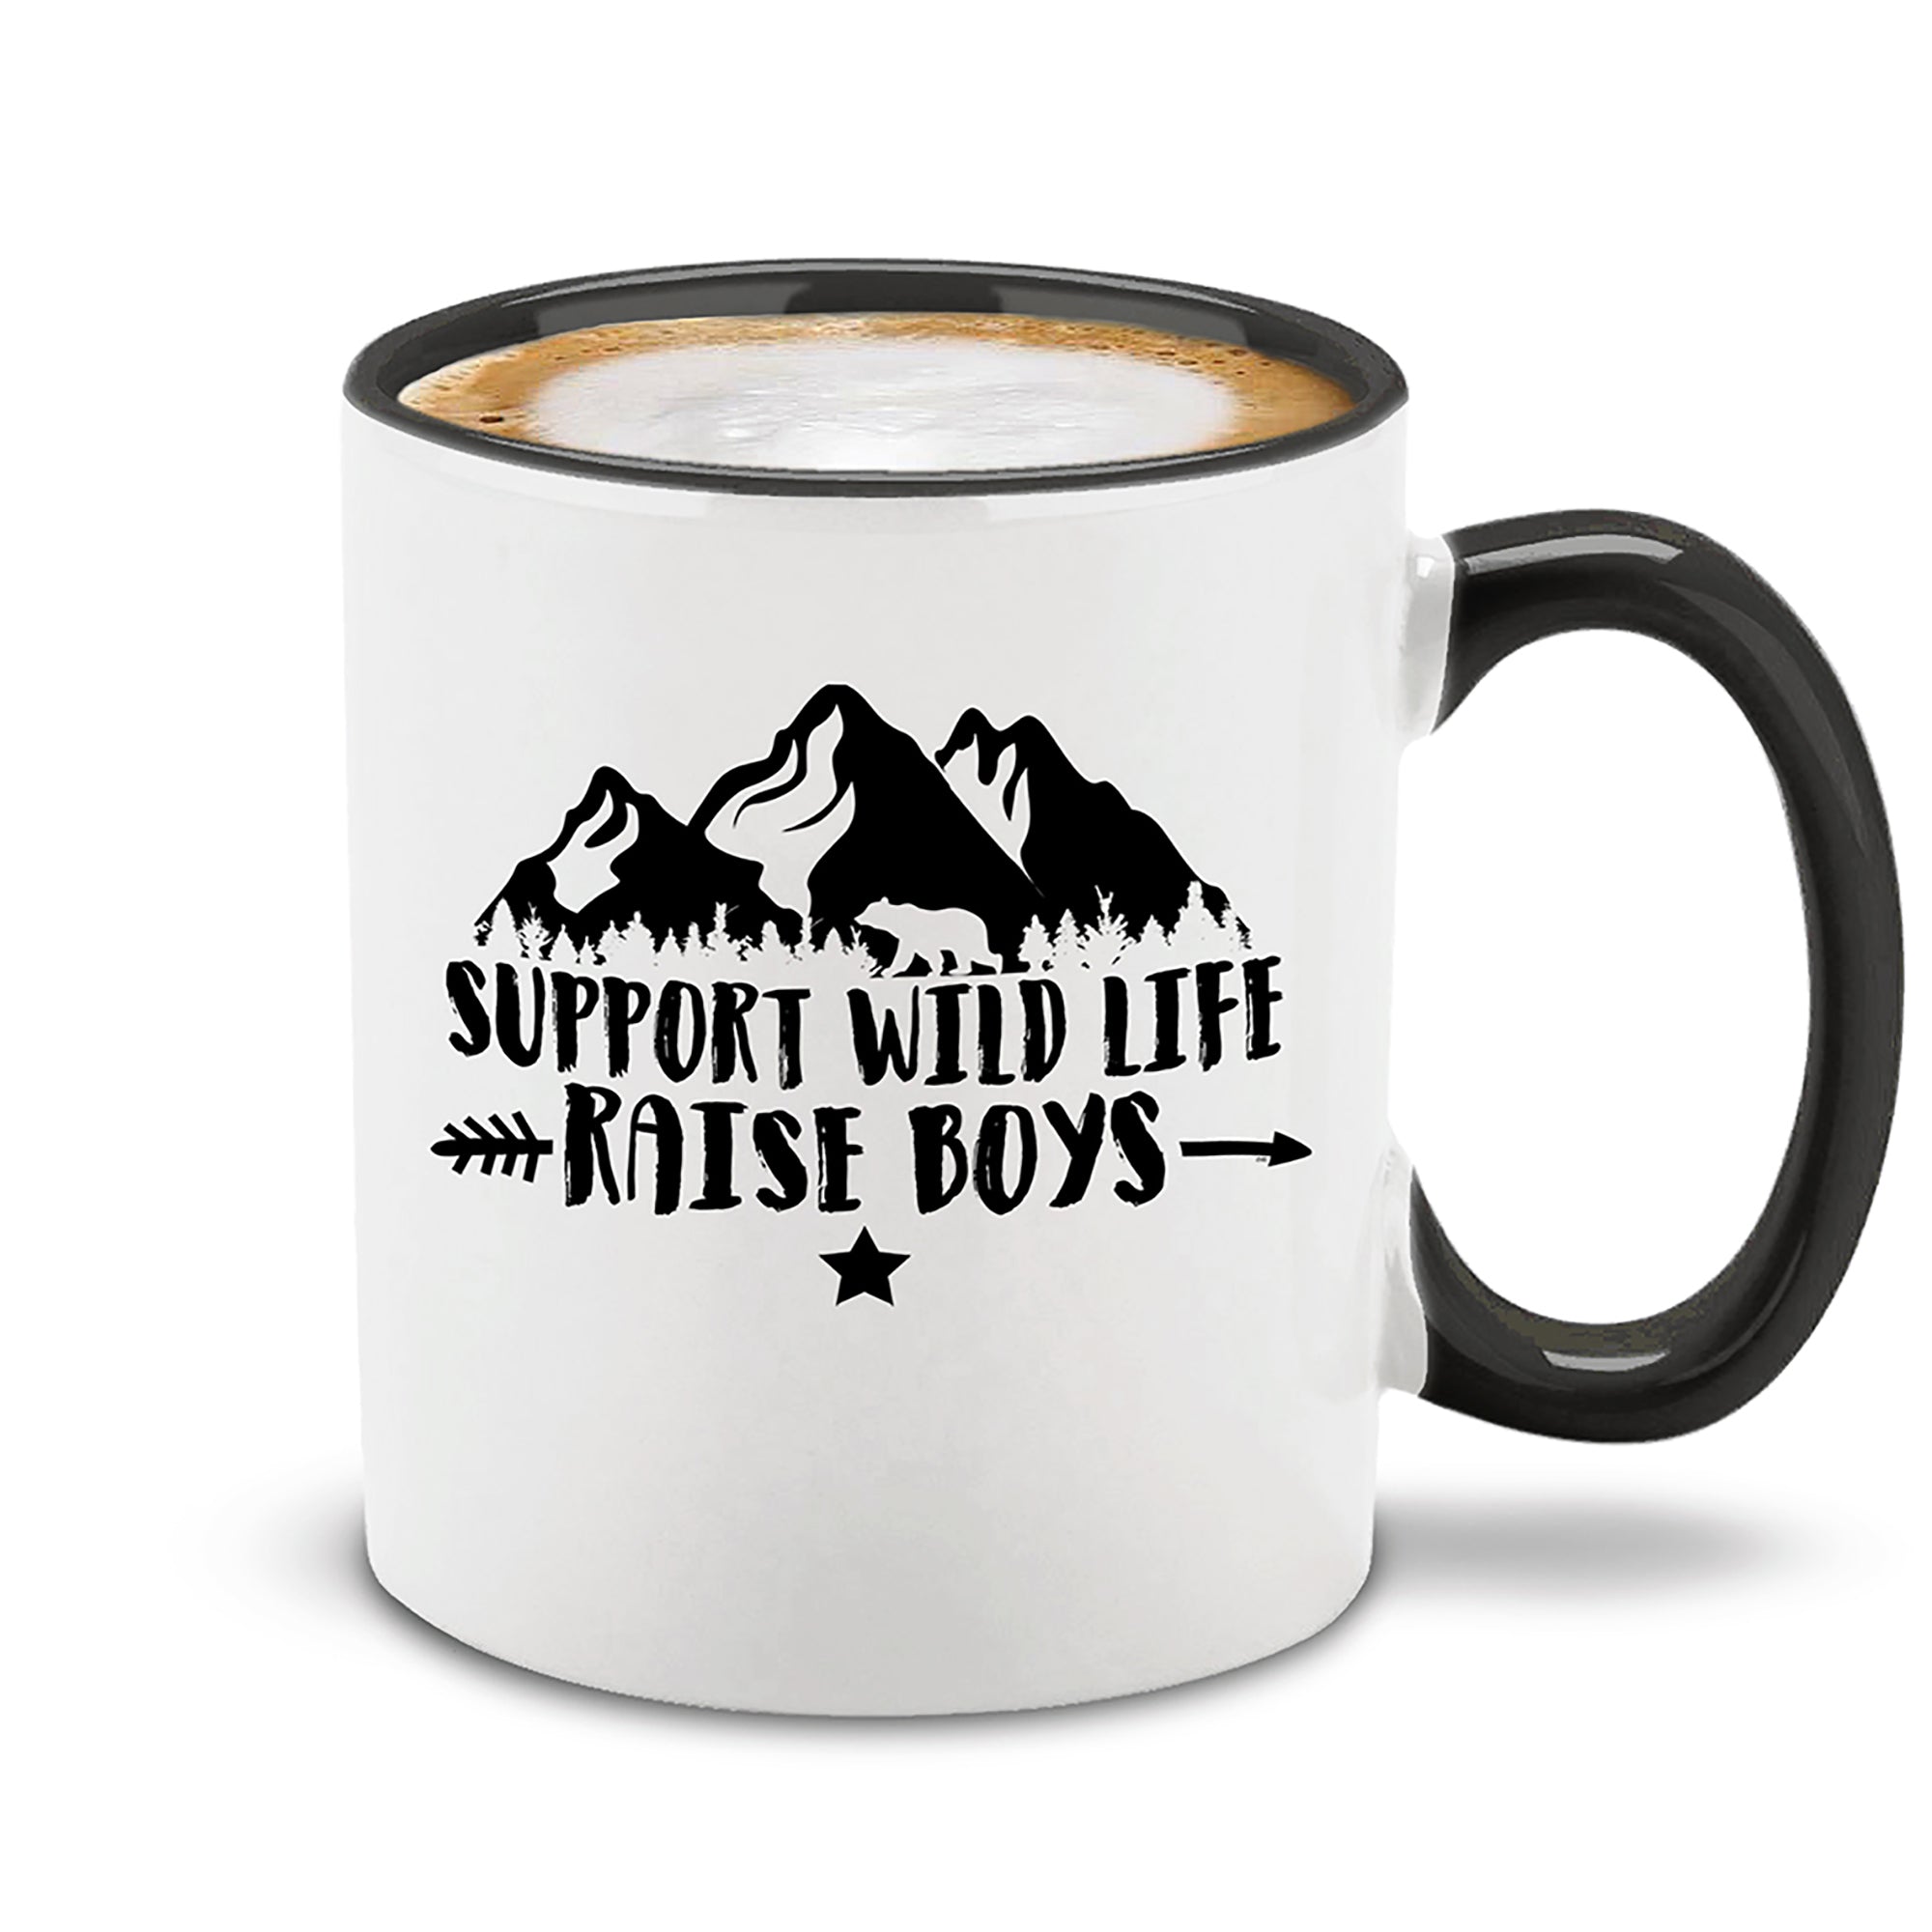 Support Wild Life Raise Boys Black Handle Ceramic Coffee Mug